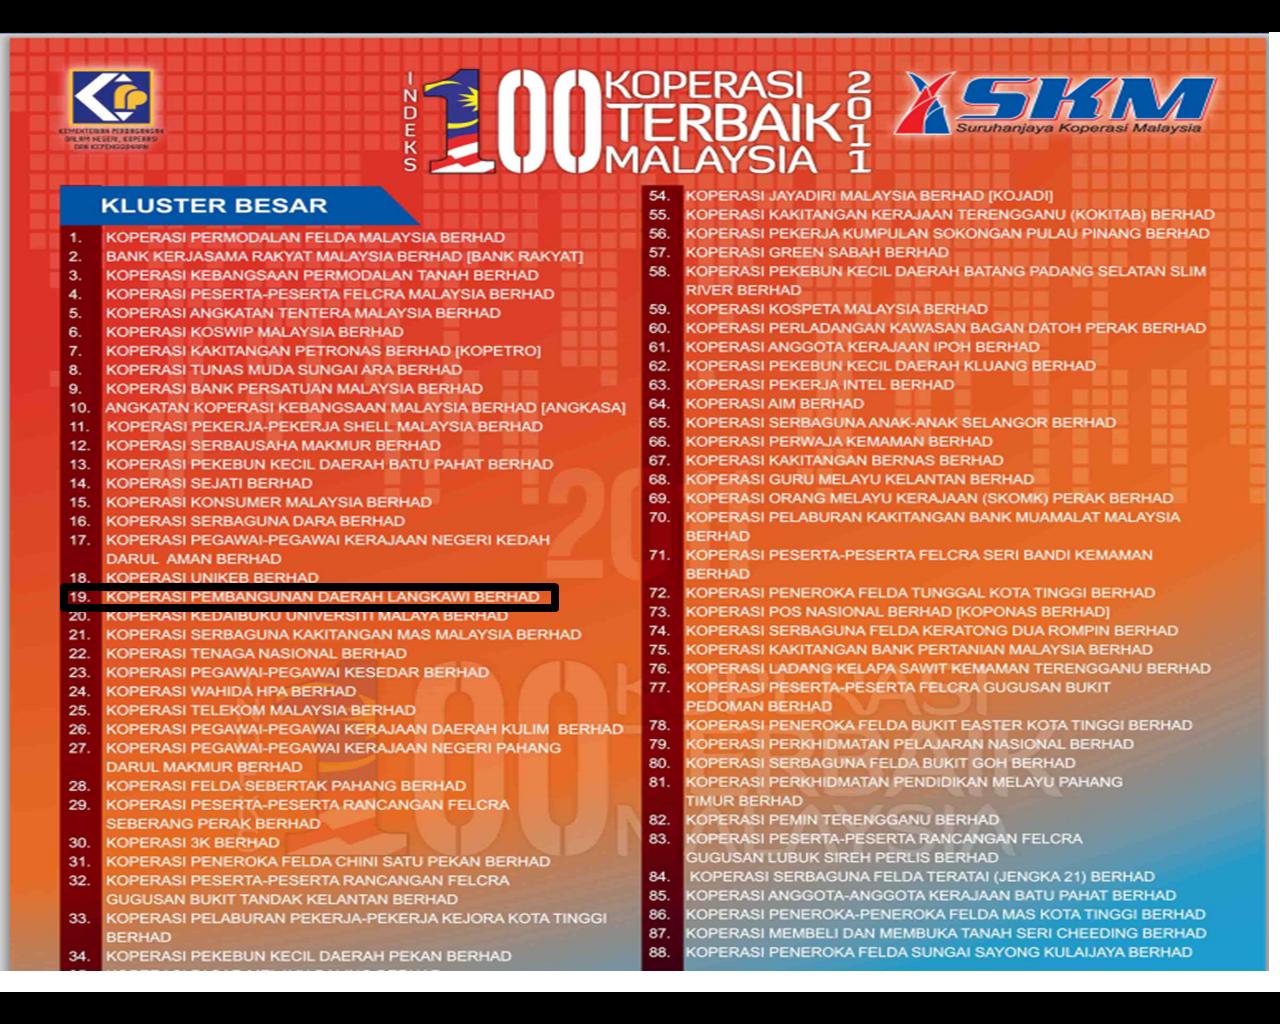 Koperasi Pembangunan Daerah Langkawi Berhad Senarai 100 Koperasi Terbaik Malaysia